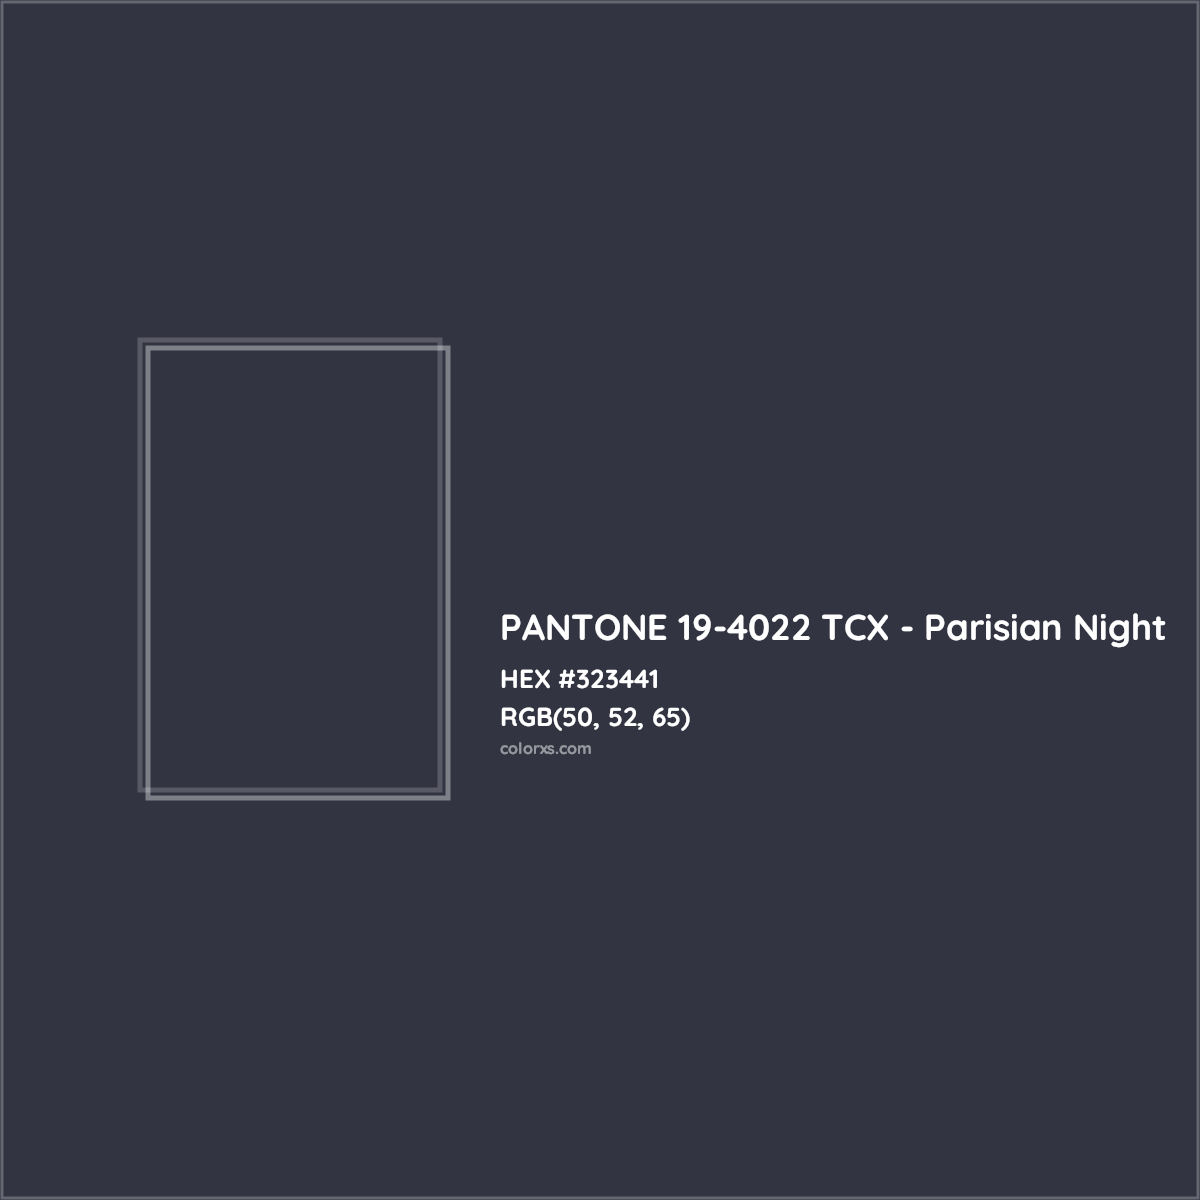 HEX #323441 PANTONE 19-4022 TCX - Parisian Night CMS Pantone TCX - Color Code